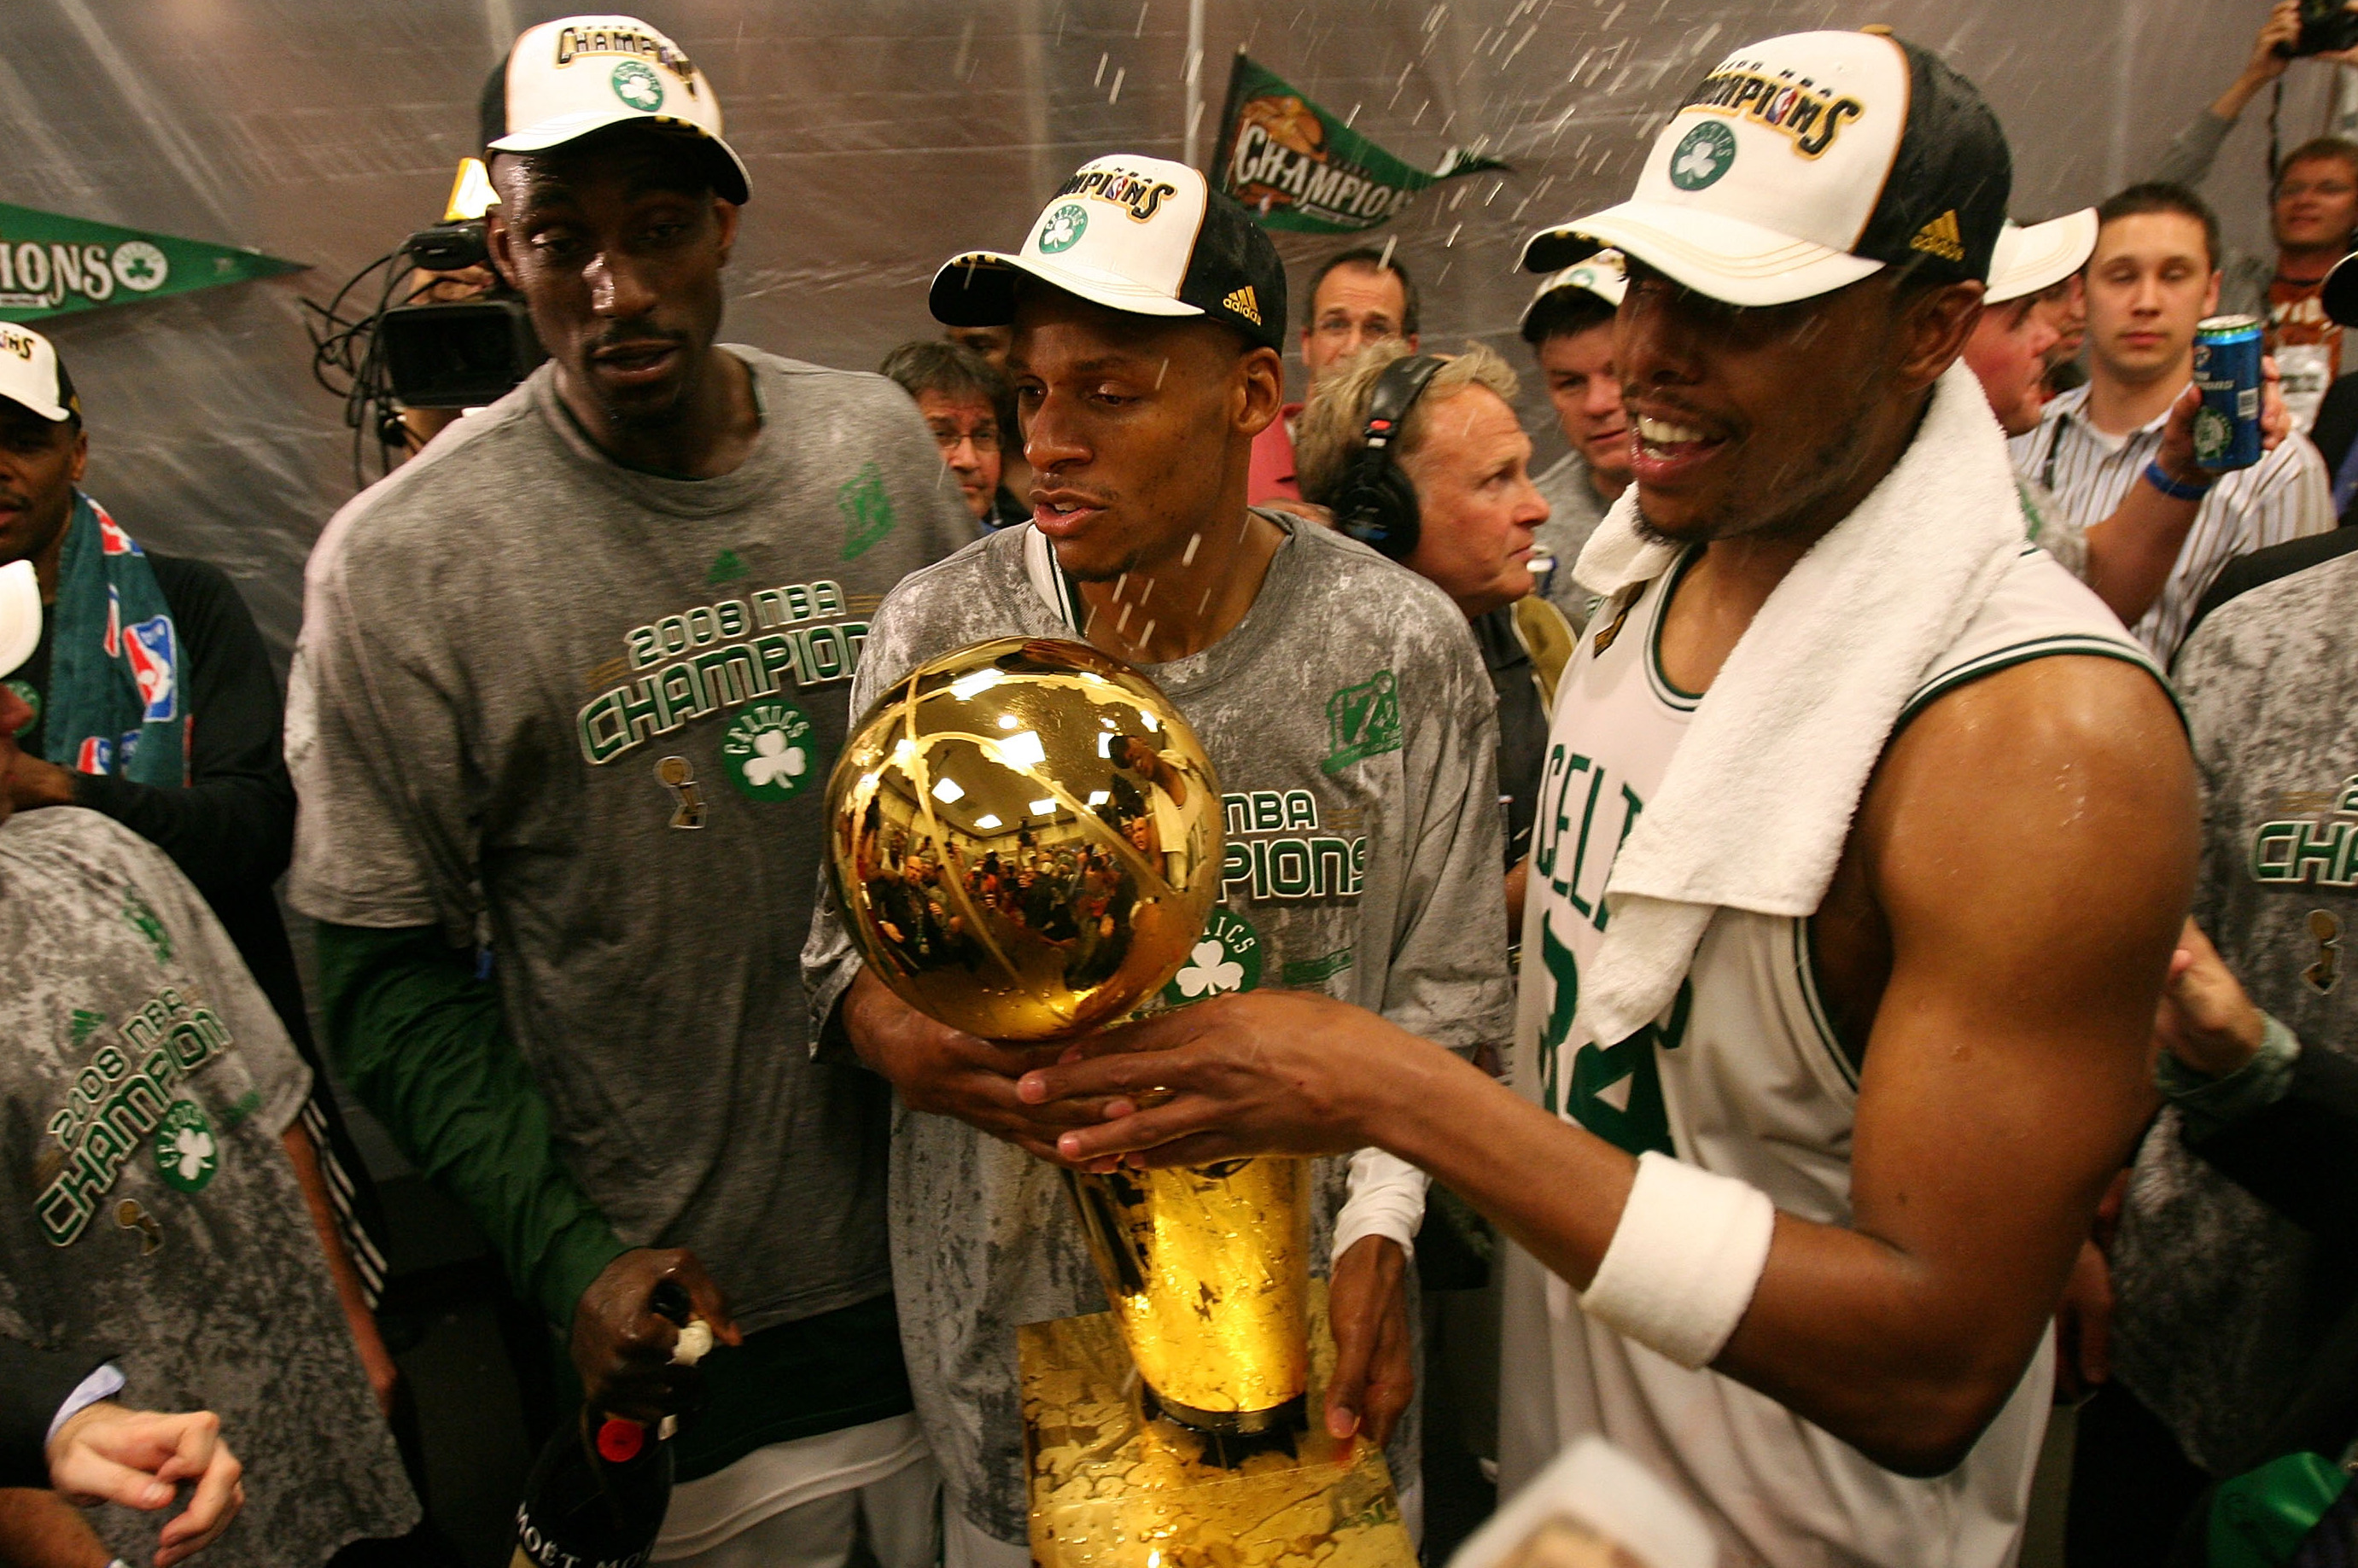 2008- Boston Celtics win NBA Championship. The last time they won